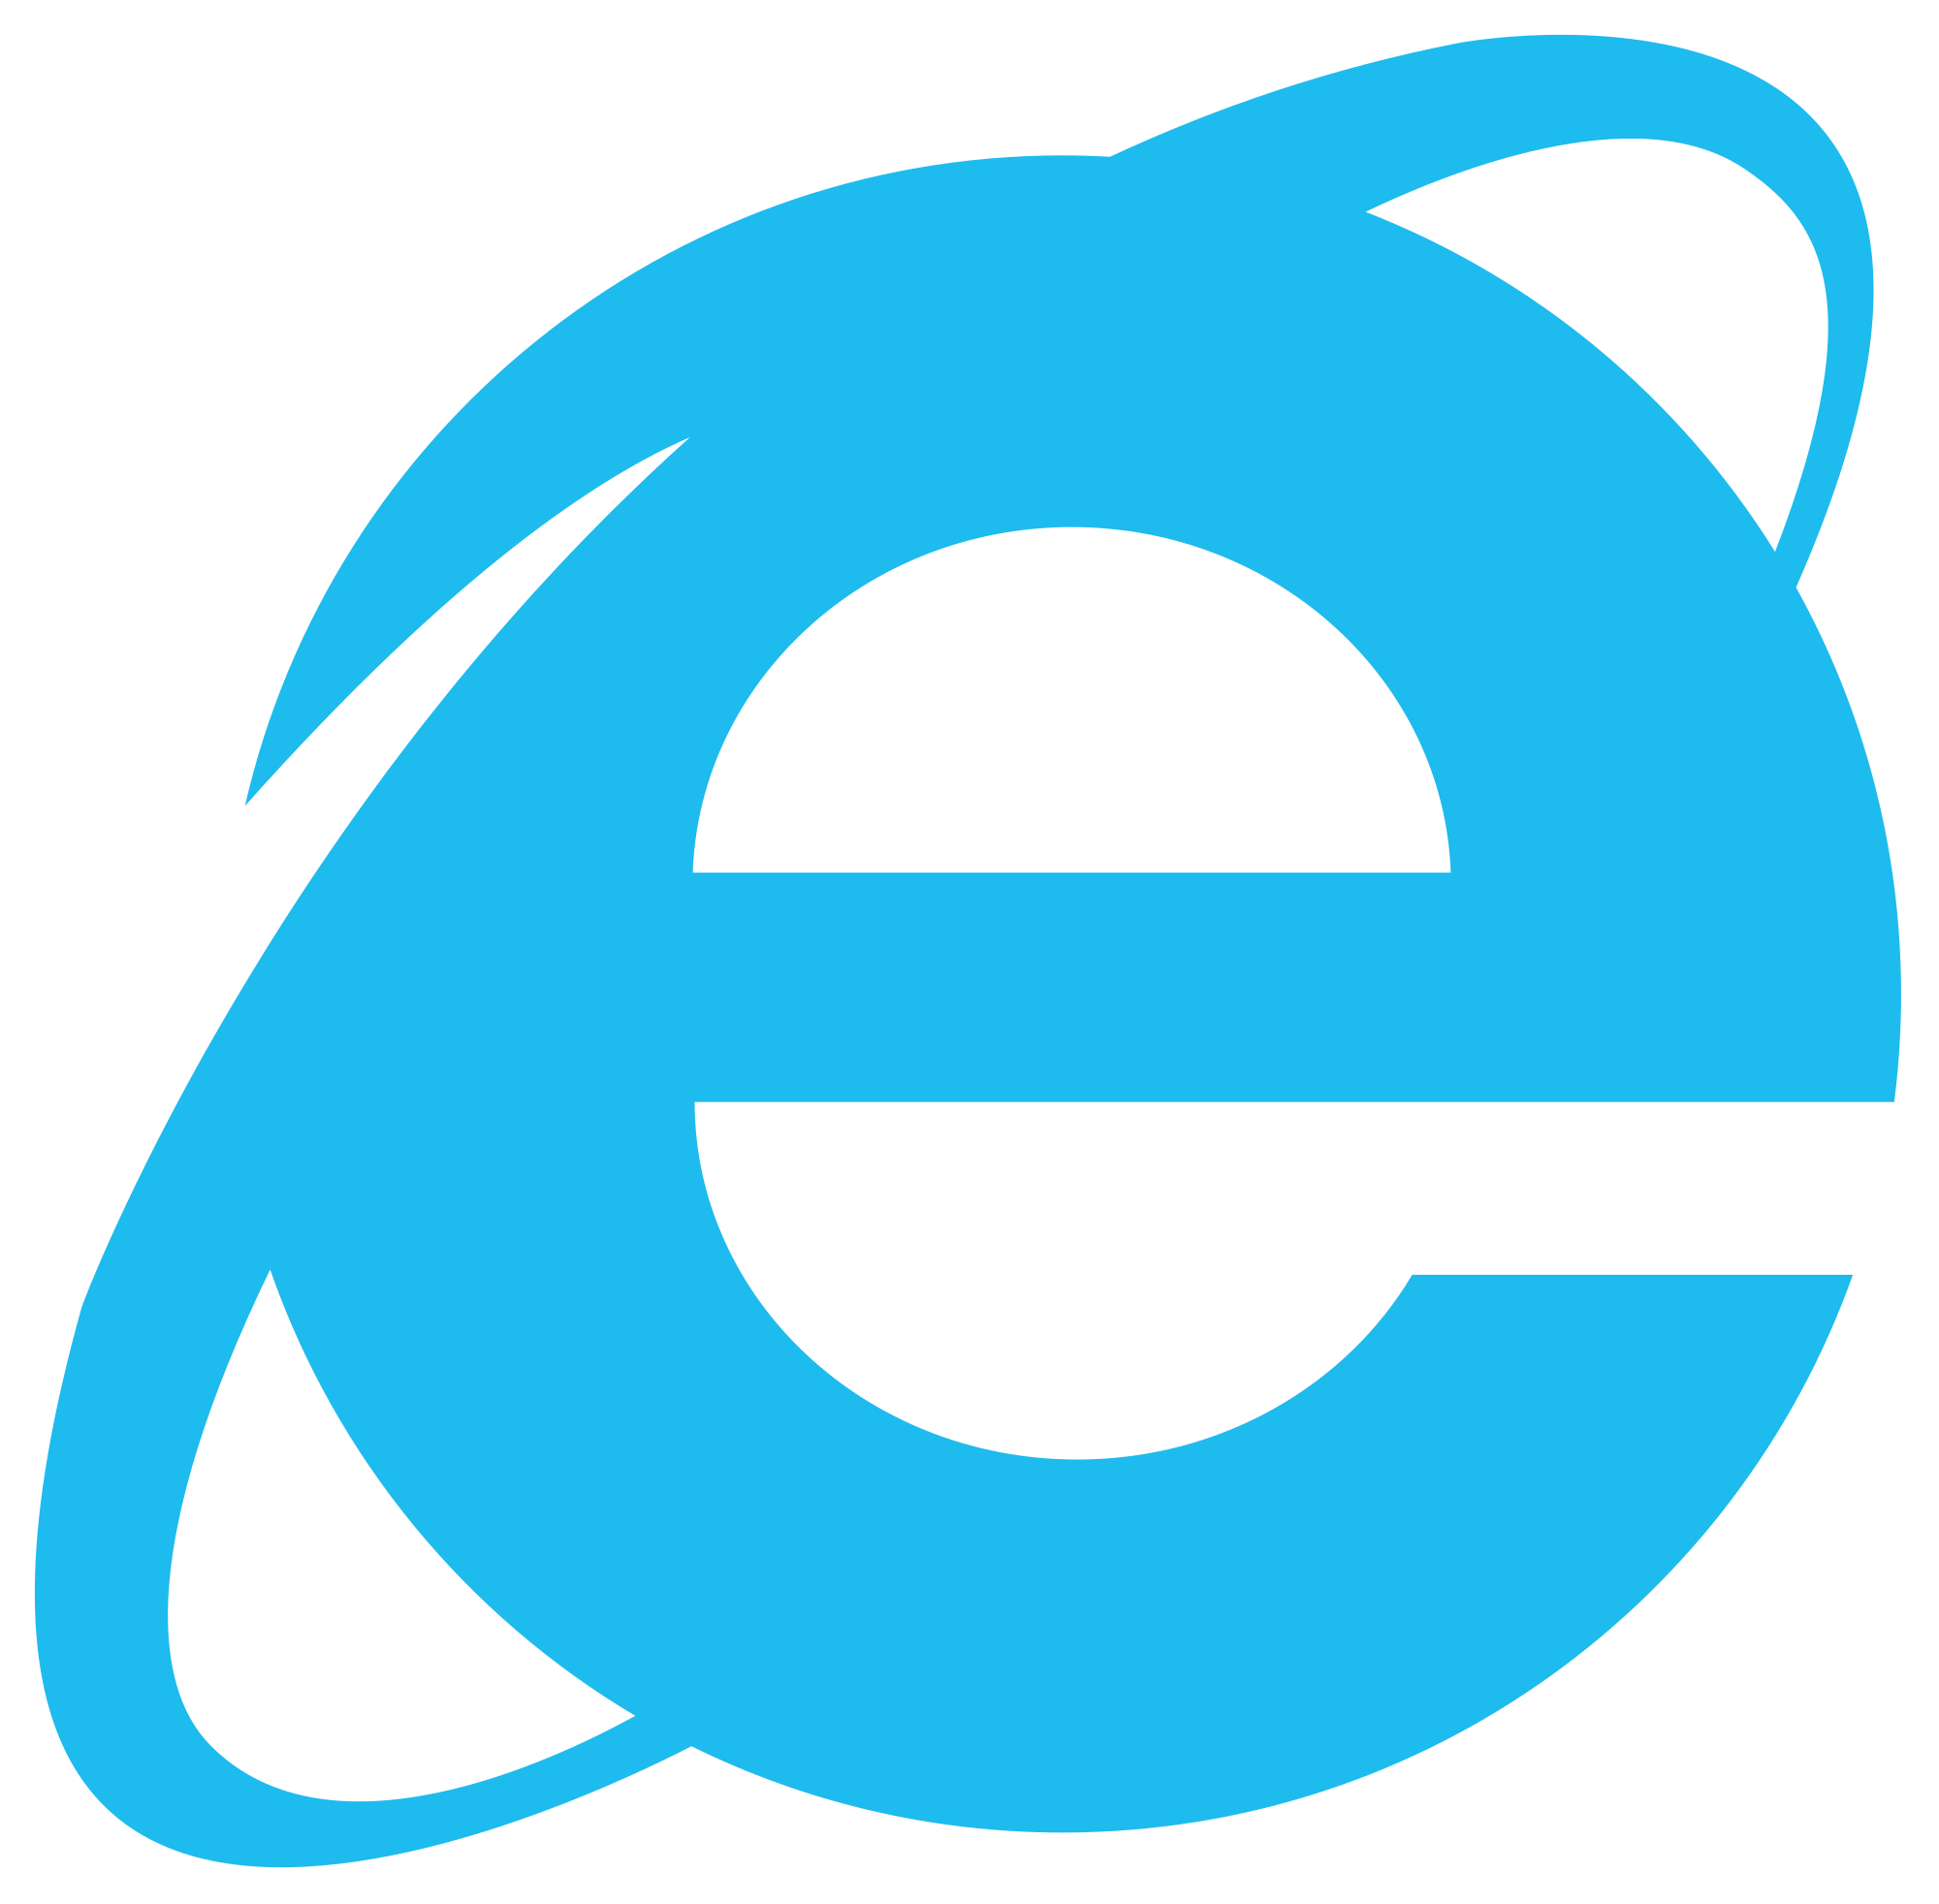 Internet Explorer 11 Logo - File:Internet Explorer 10+11 logo.svg - Wikimedia Commons